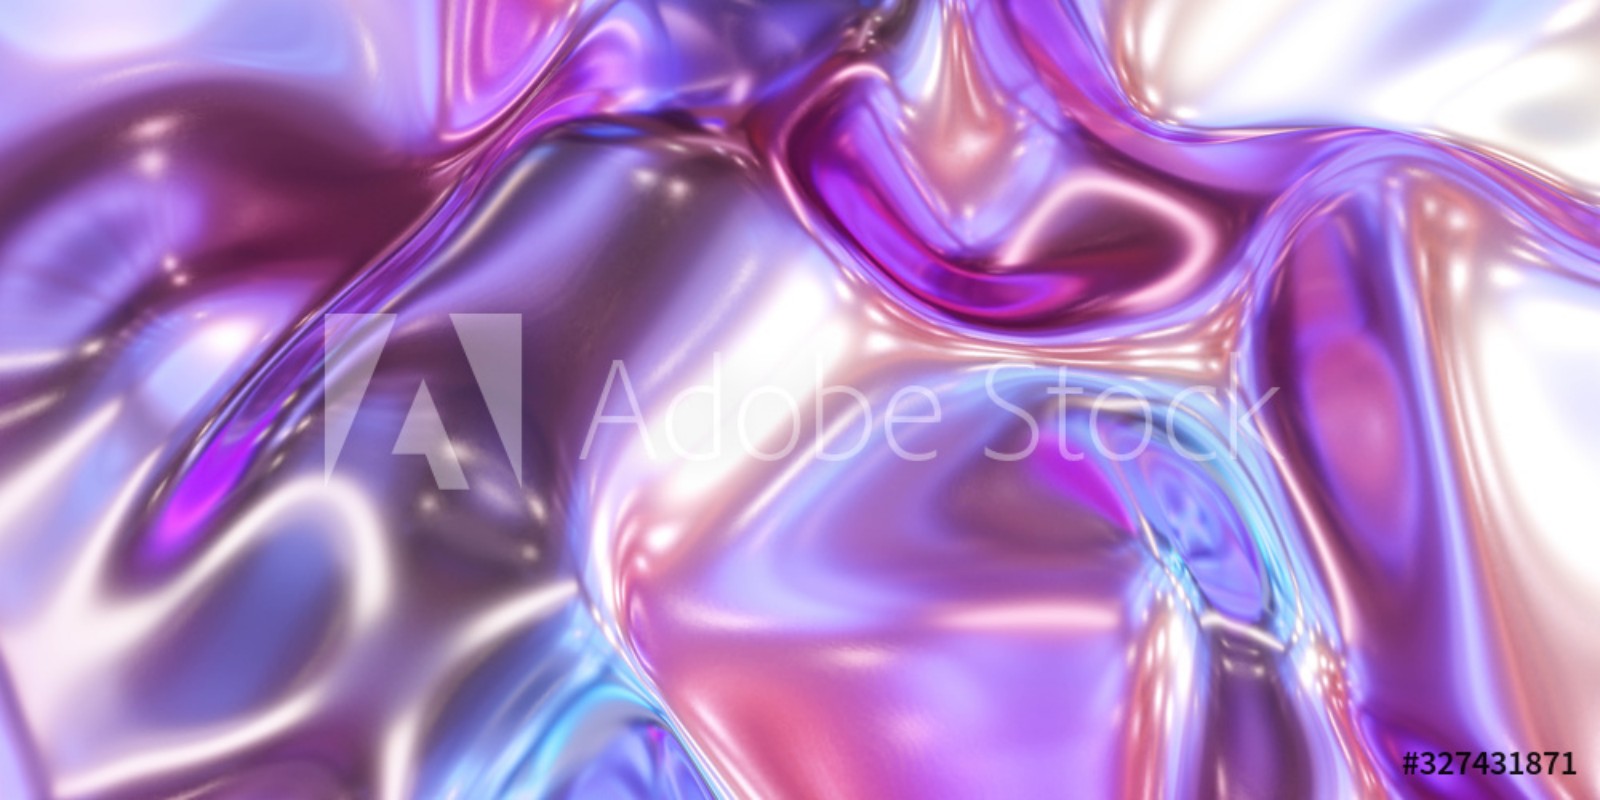 Afbeeldingen van Glossy metal neon pink and blue fluid glossy mirror water effect background backdrop texture 3d render illustration